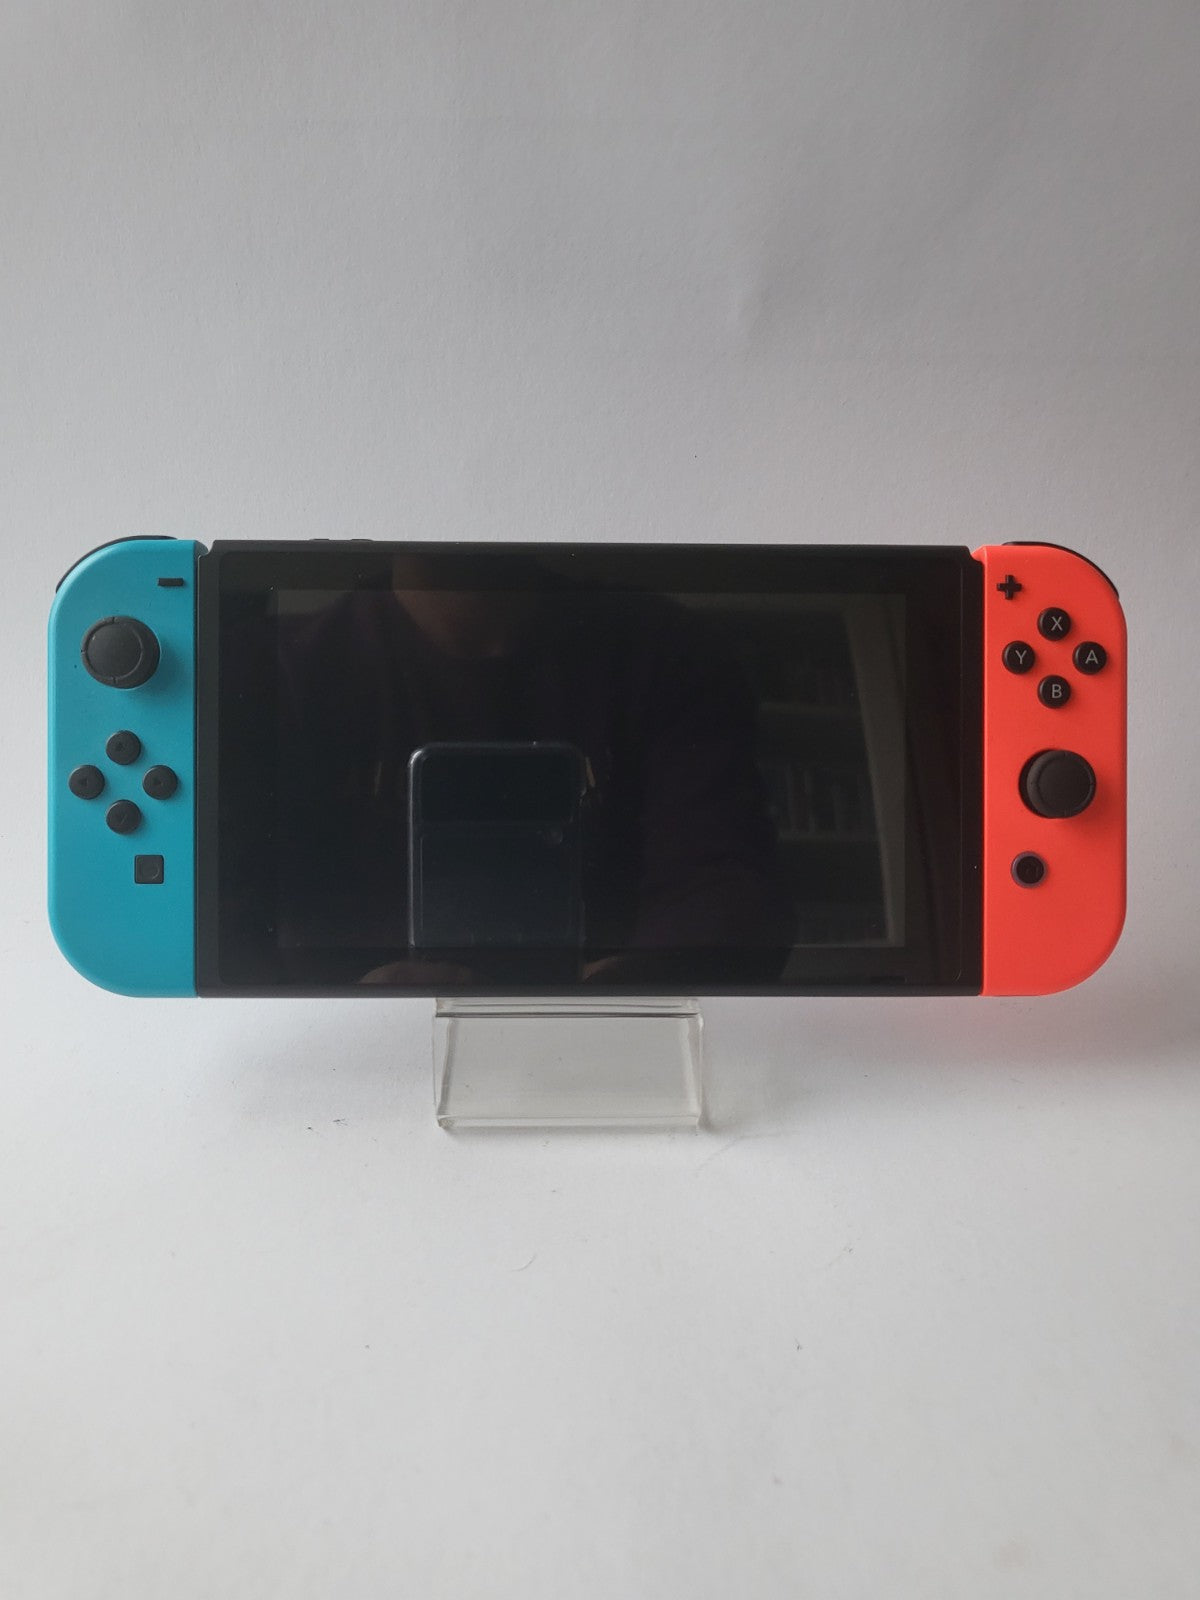 Nintendo Switch komplett im Karton